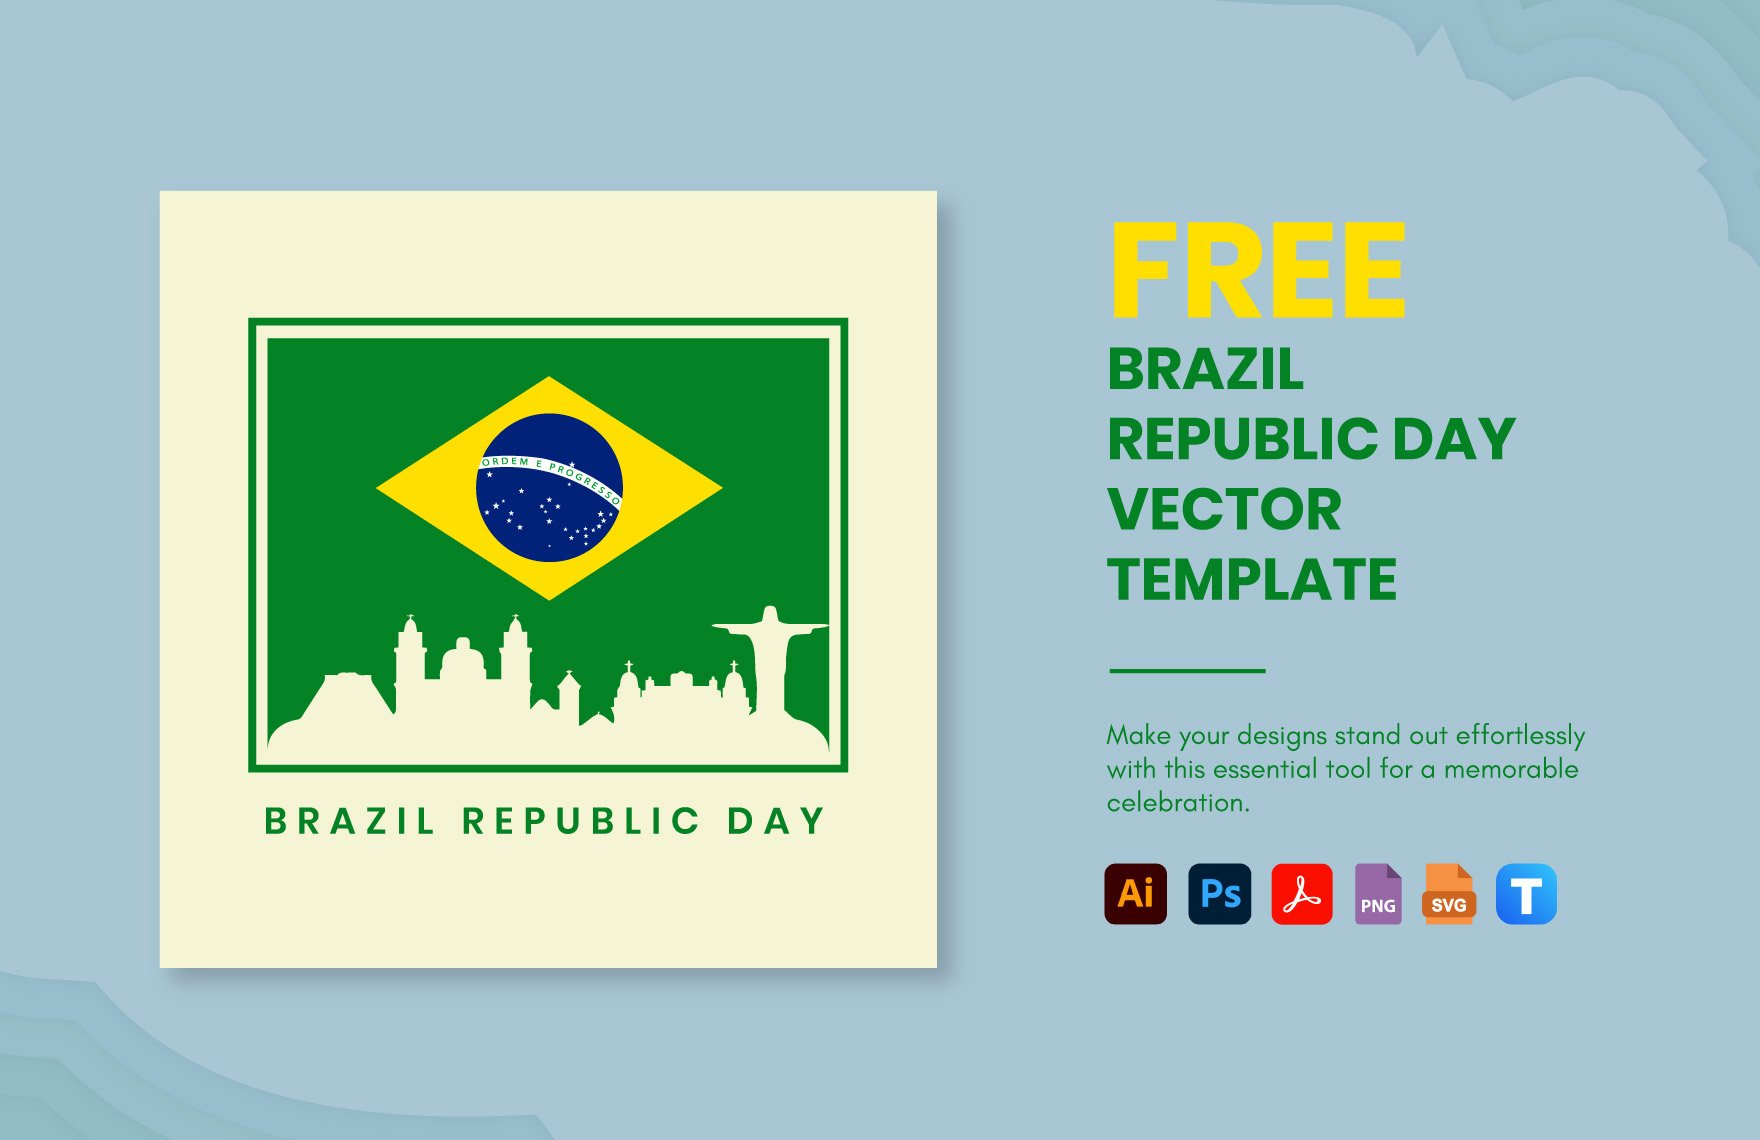 Free Brazil Republic Day Vector in PDF, Illustrator, PSD, SVG, PNG